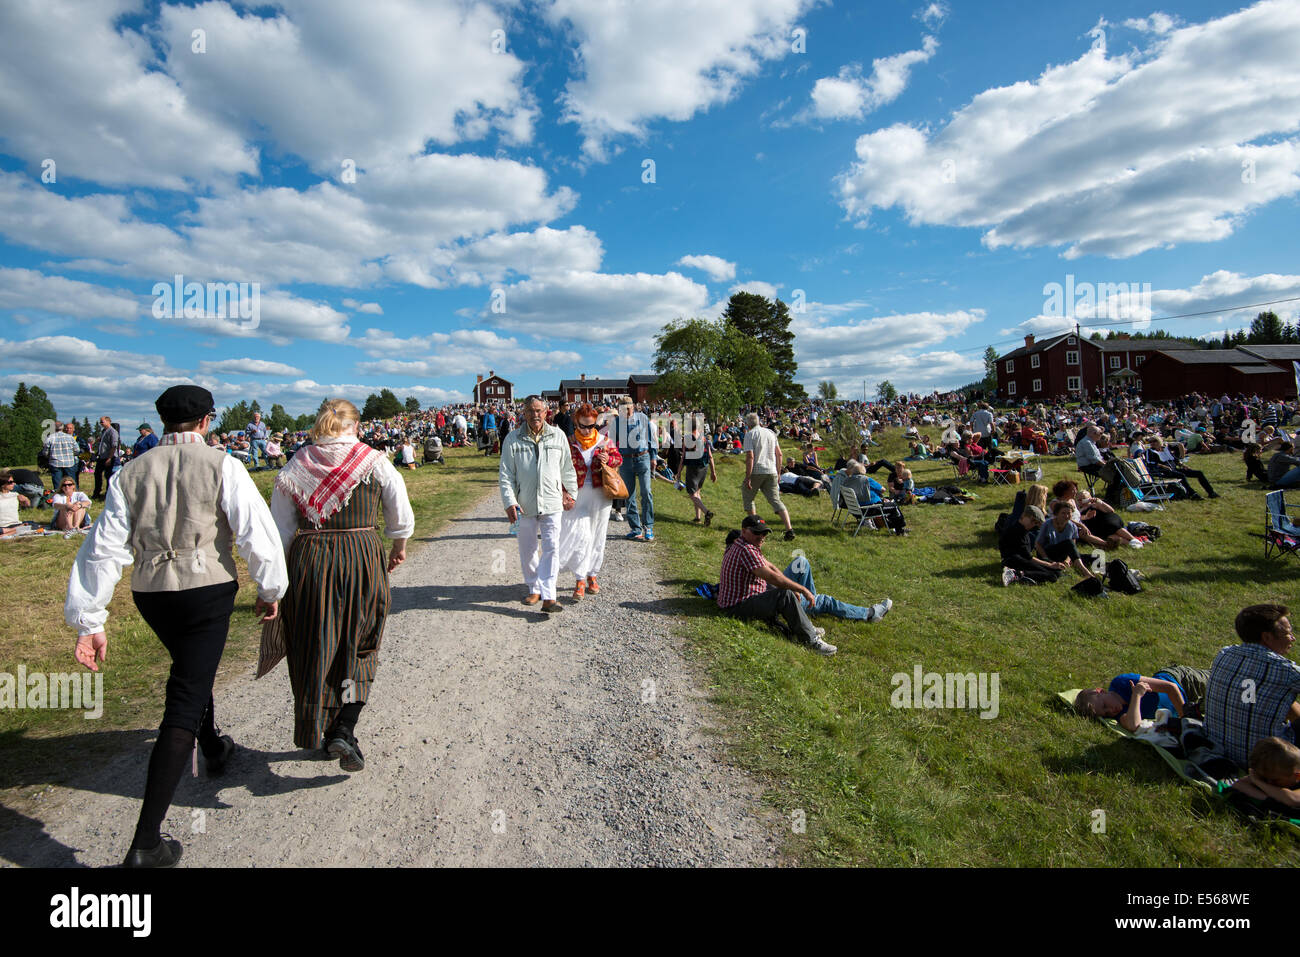 The famous traditional folk music festival in Bingsjo, Sweden. Stock Photo